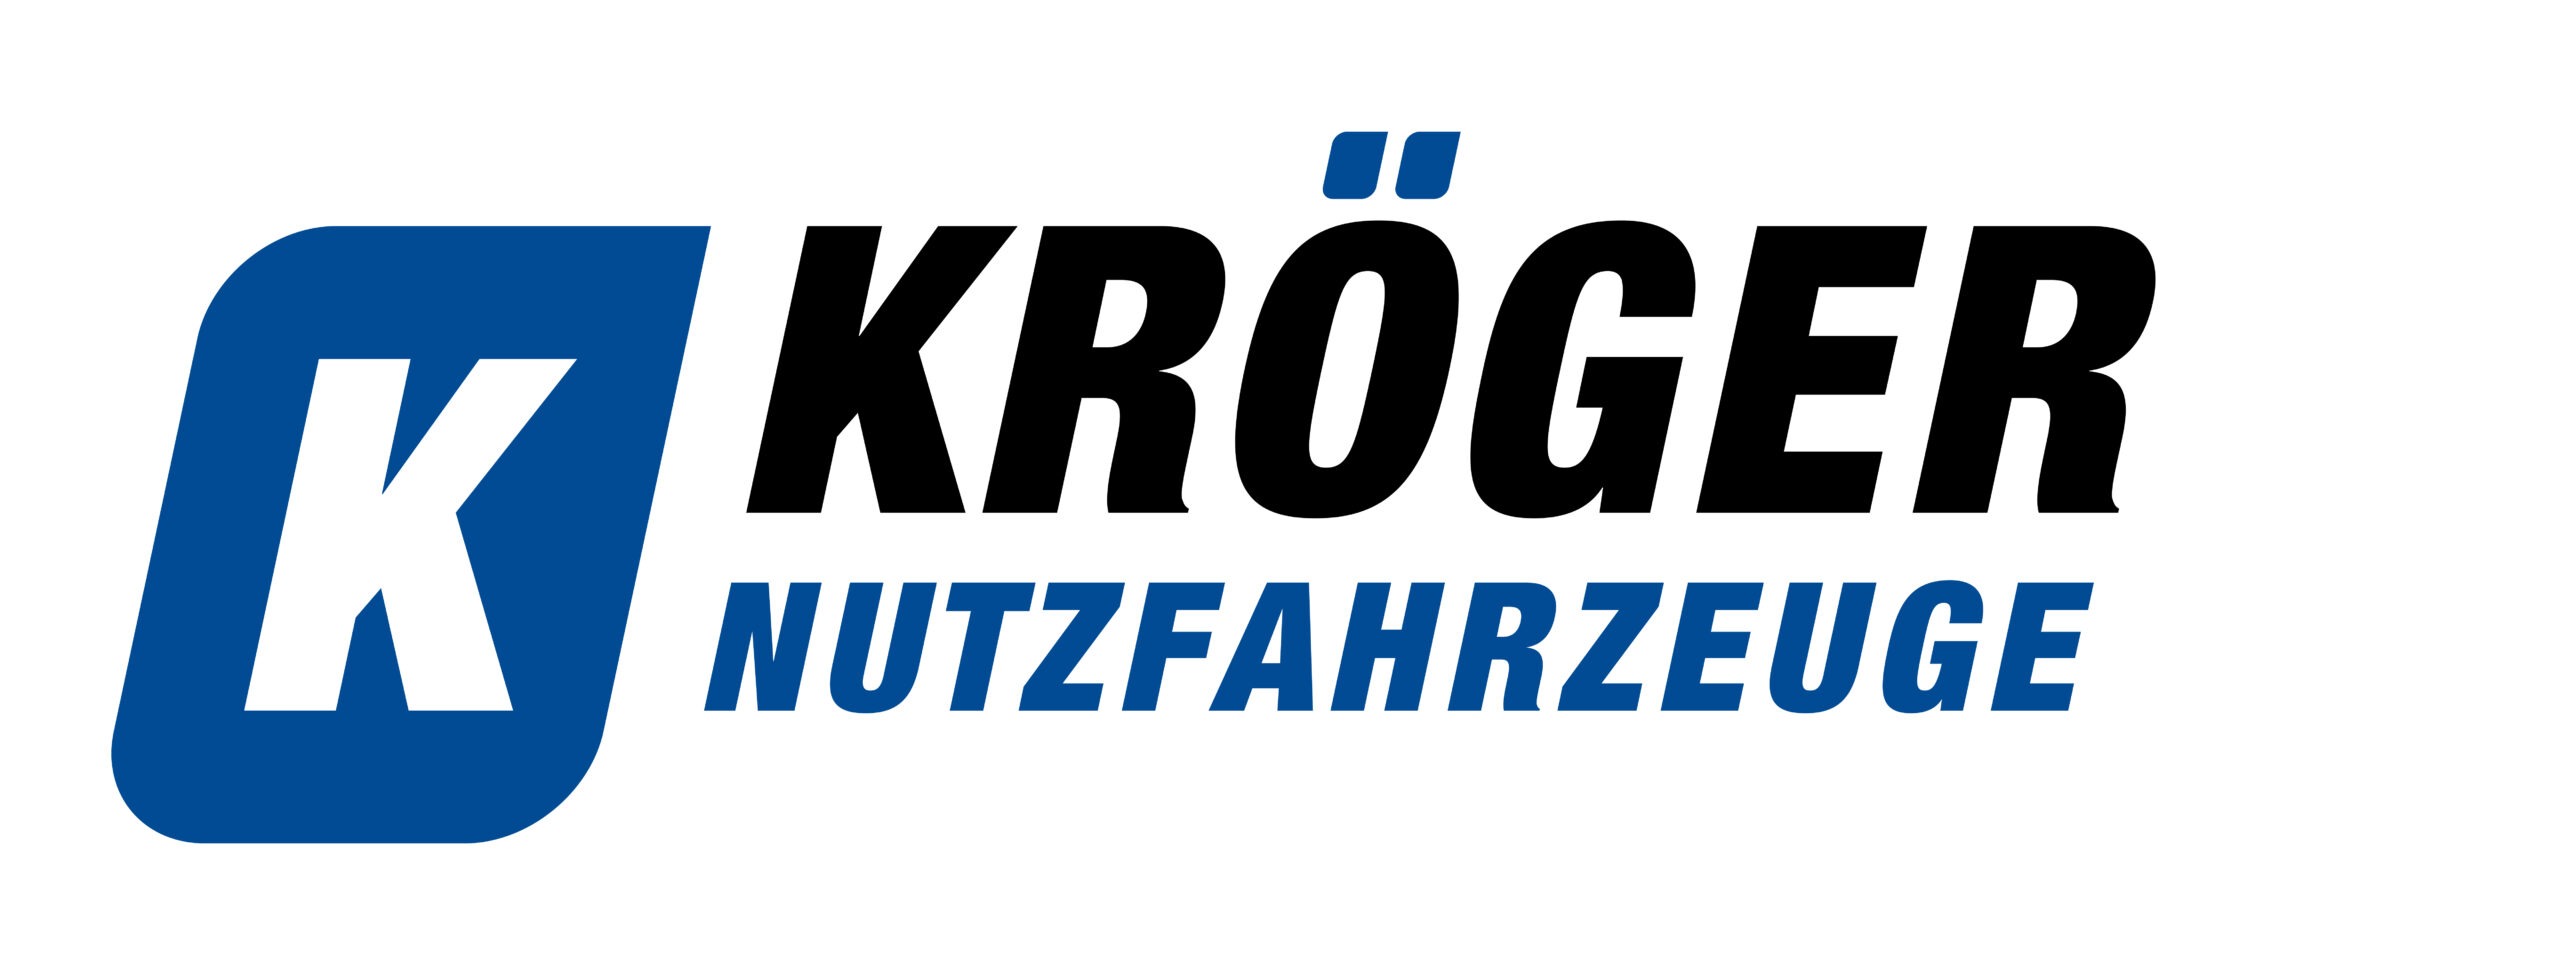 Peter Kröger Nutzfahrzeuge